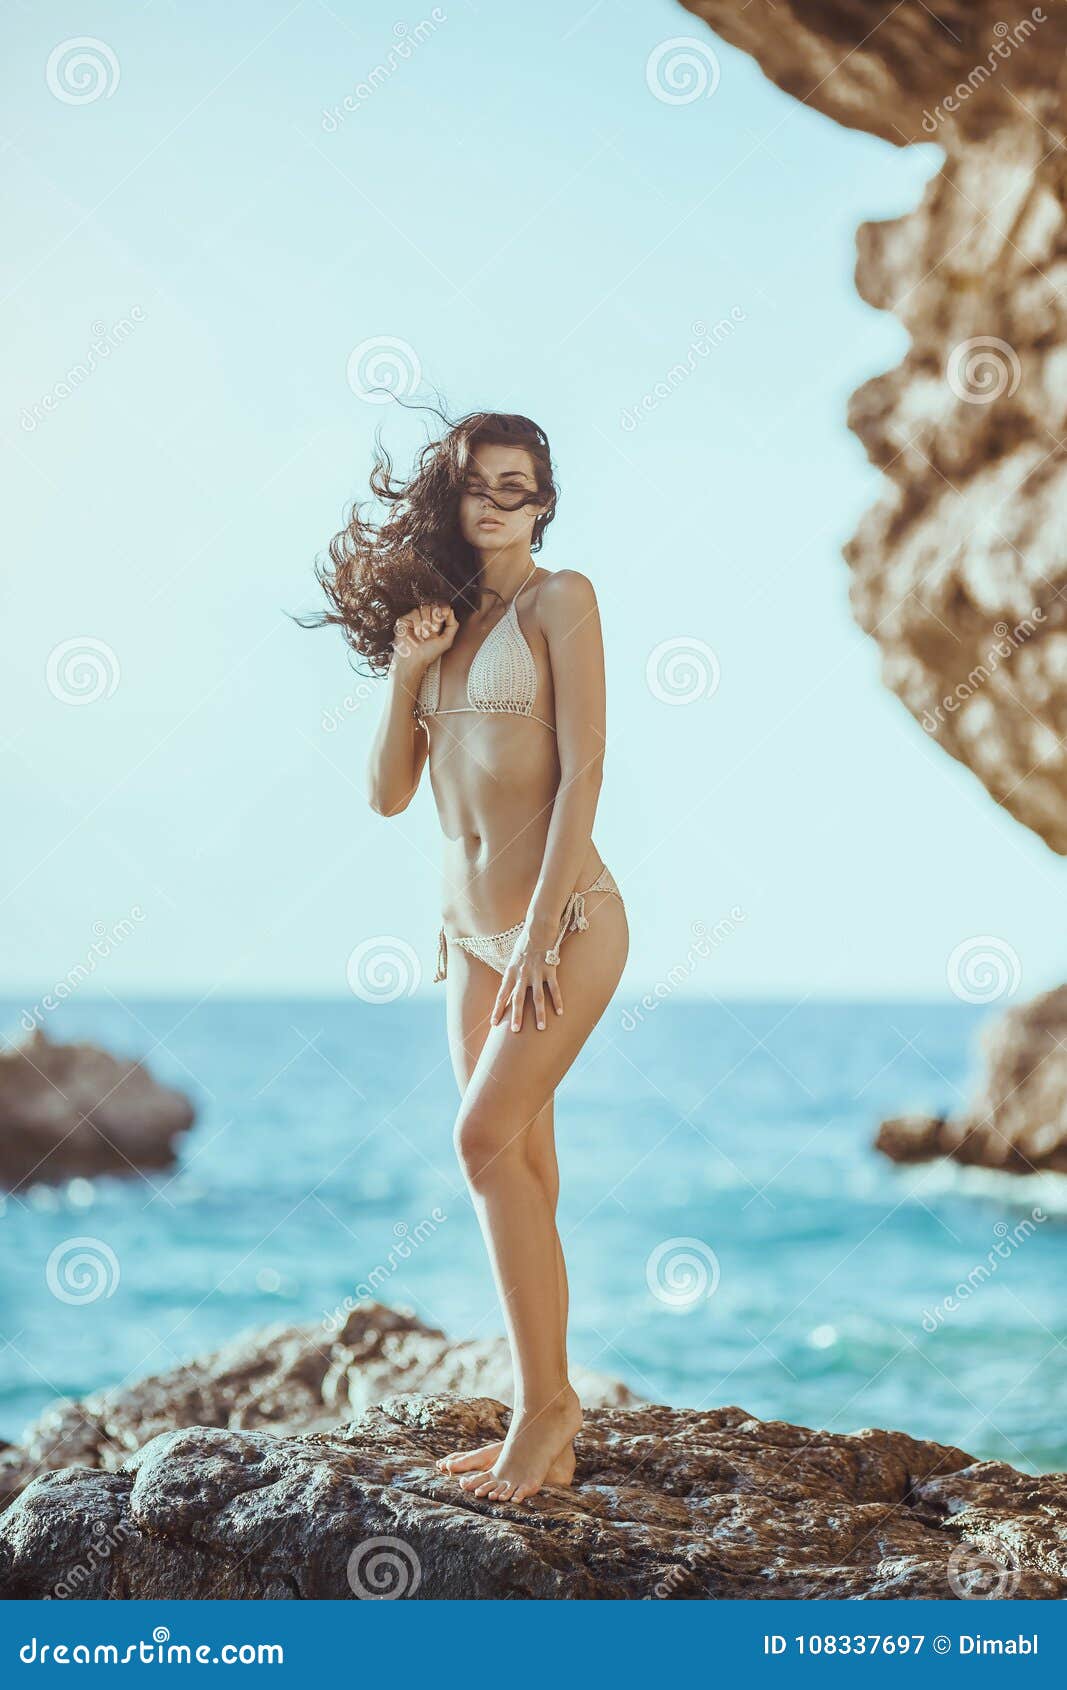 amateur beach nude photo woman